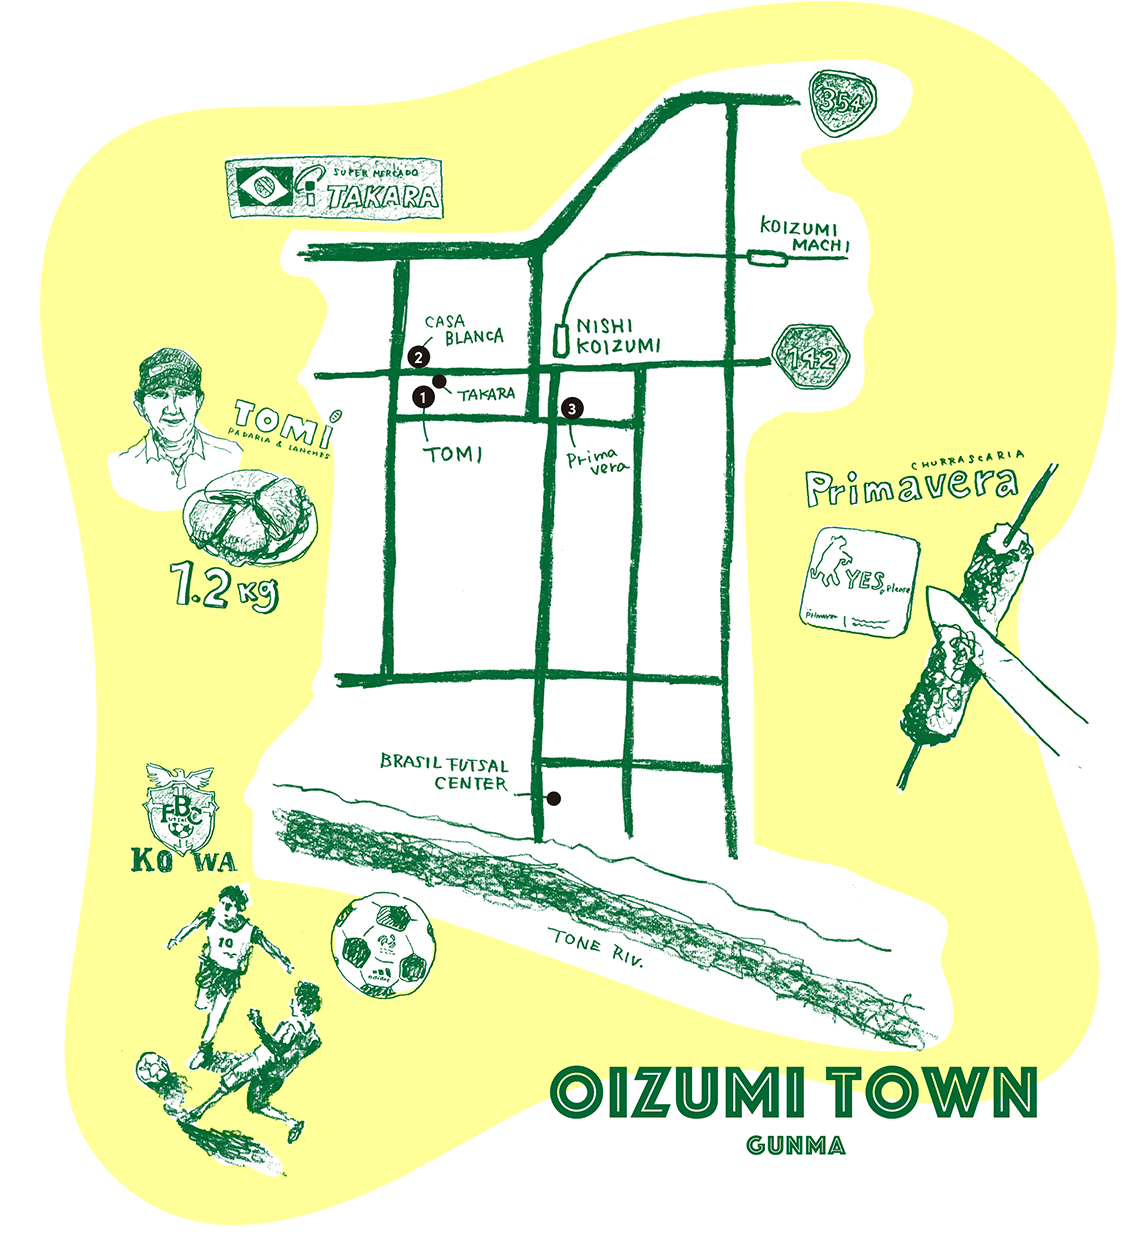 OIZUMI TOWN GUNMA